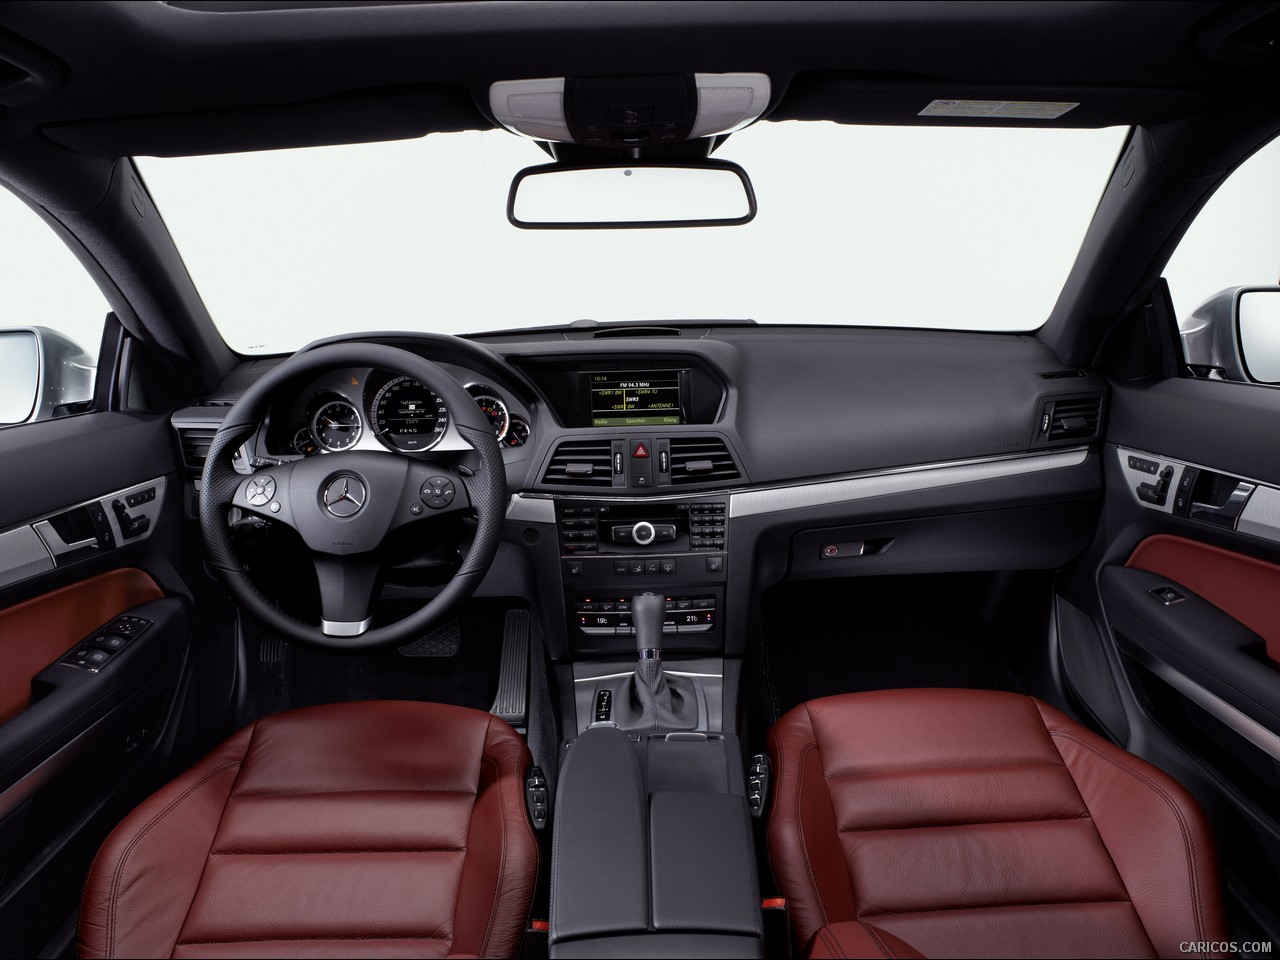 2010 Mercedes Benz E Class Coupe Interior Front Seats View